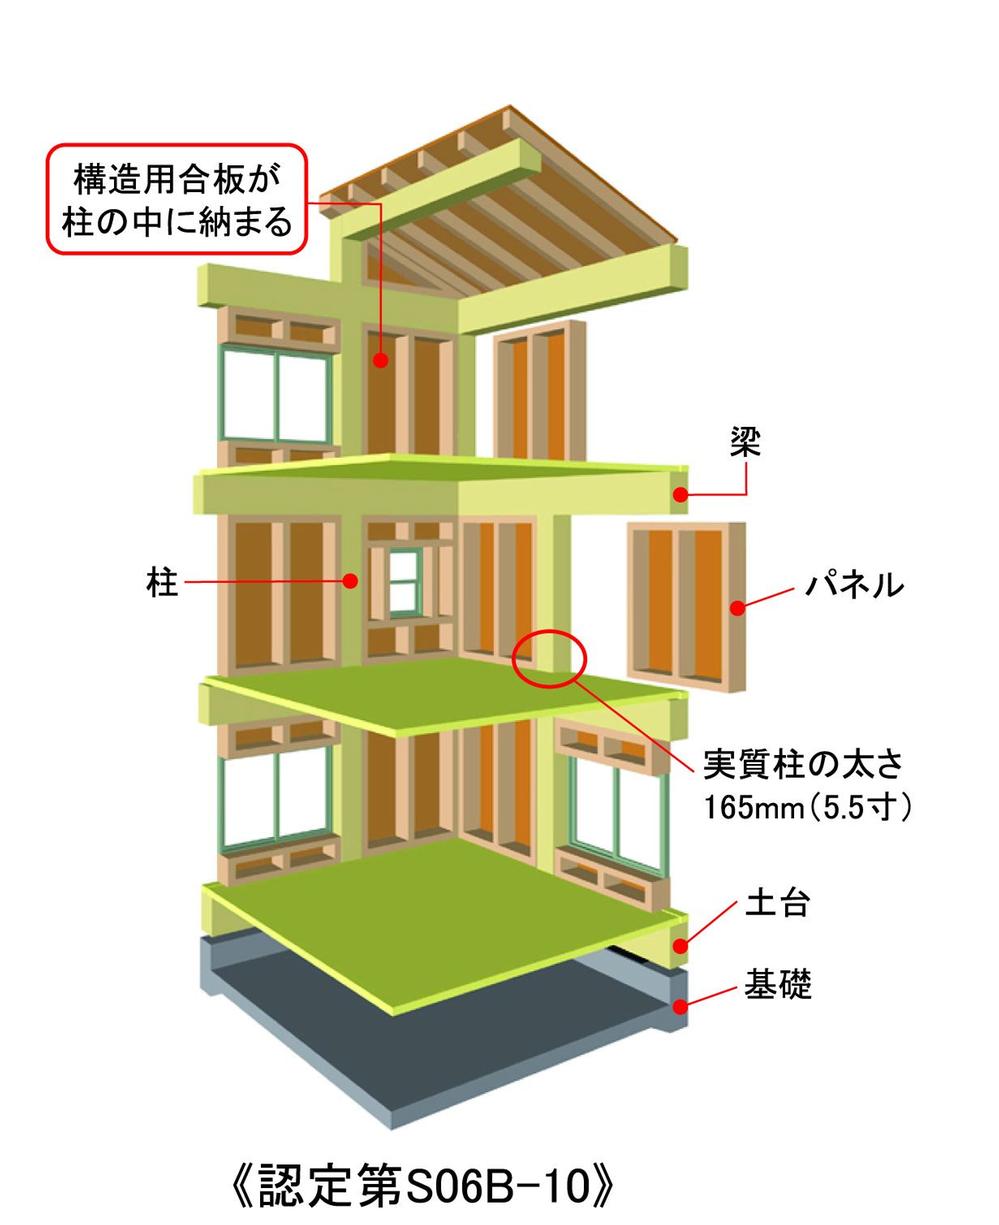 Construction ・ Construction method ・ specification. Pillars and walls